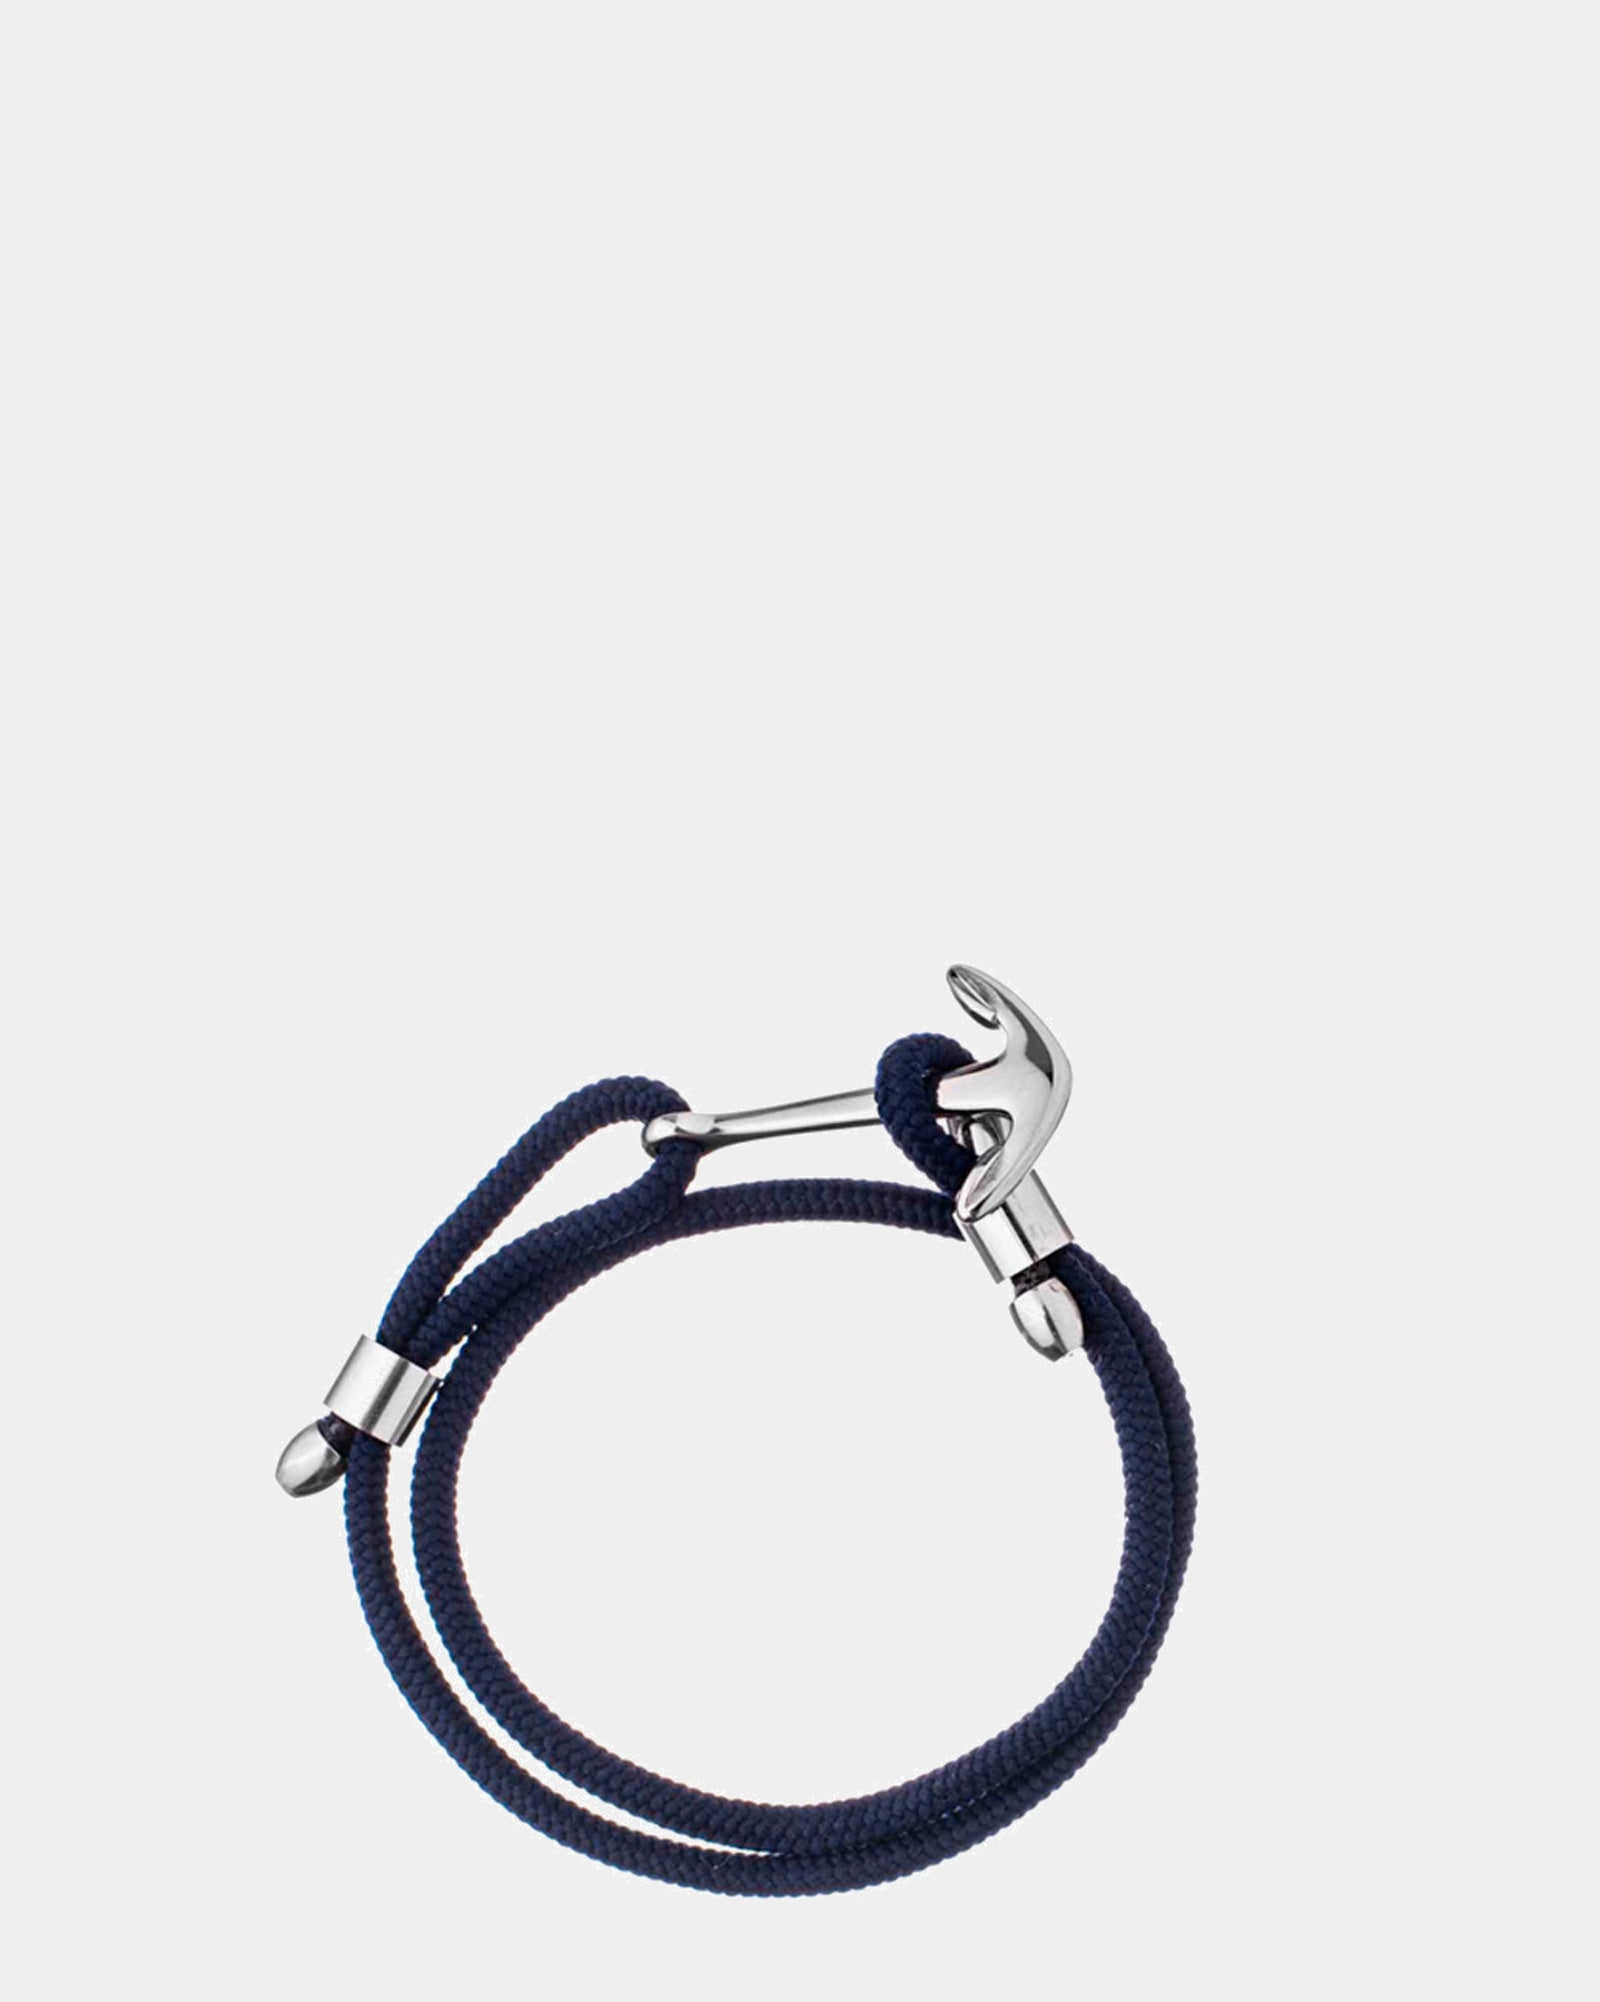 Blue Nautical Bracelet - Anchor Bracelet with anchor pendant - Online Jewelry - DICCI